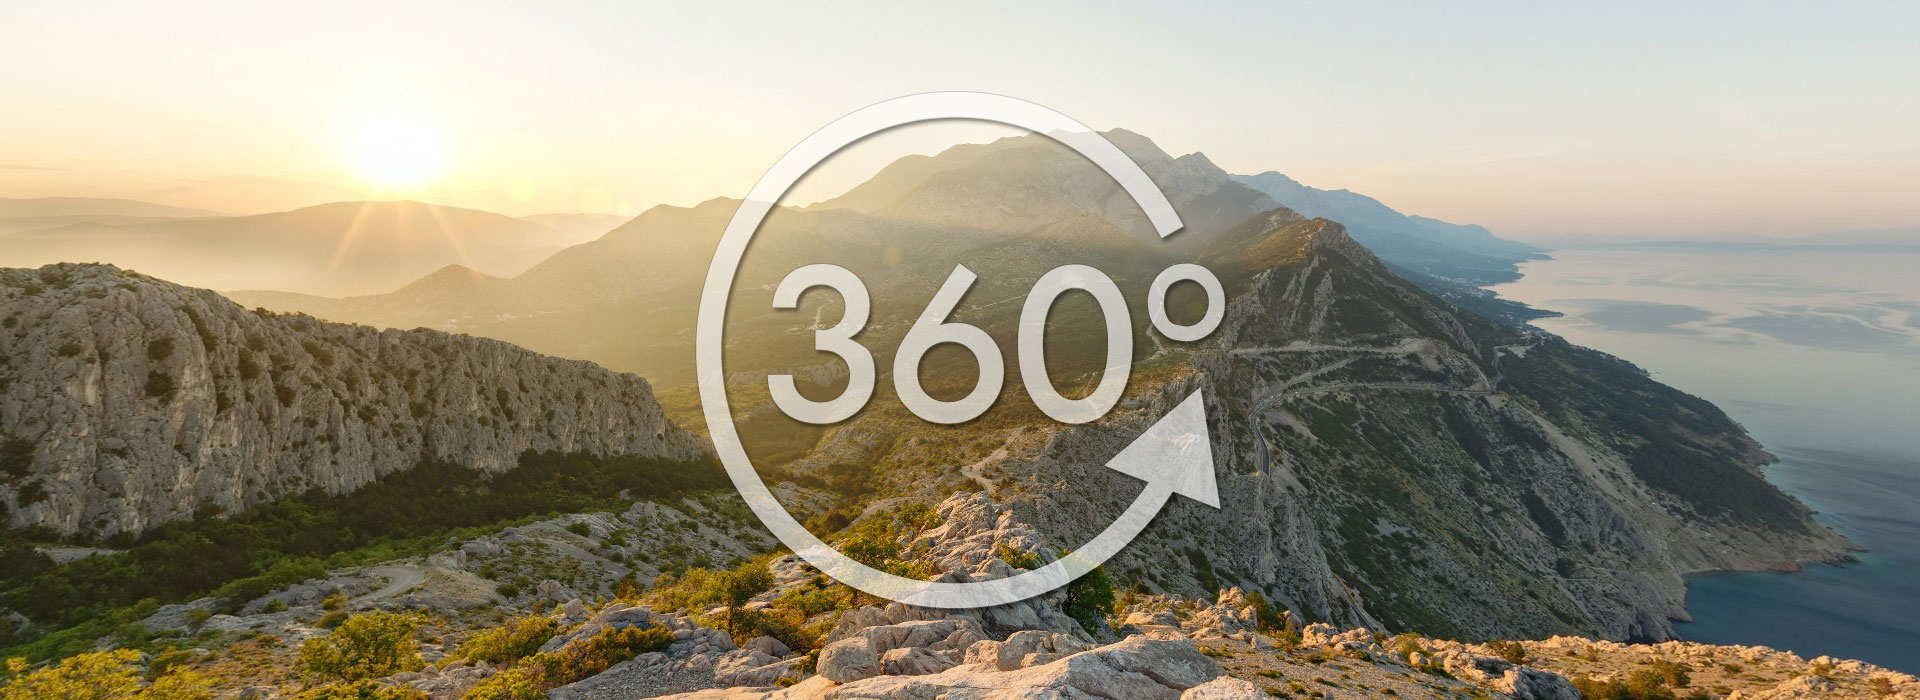 Dalmatia panorama 360